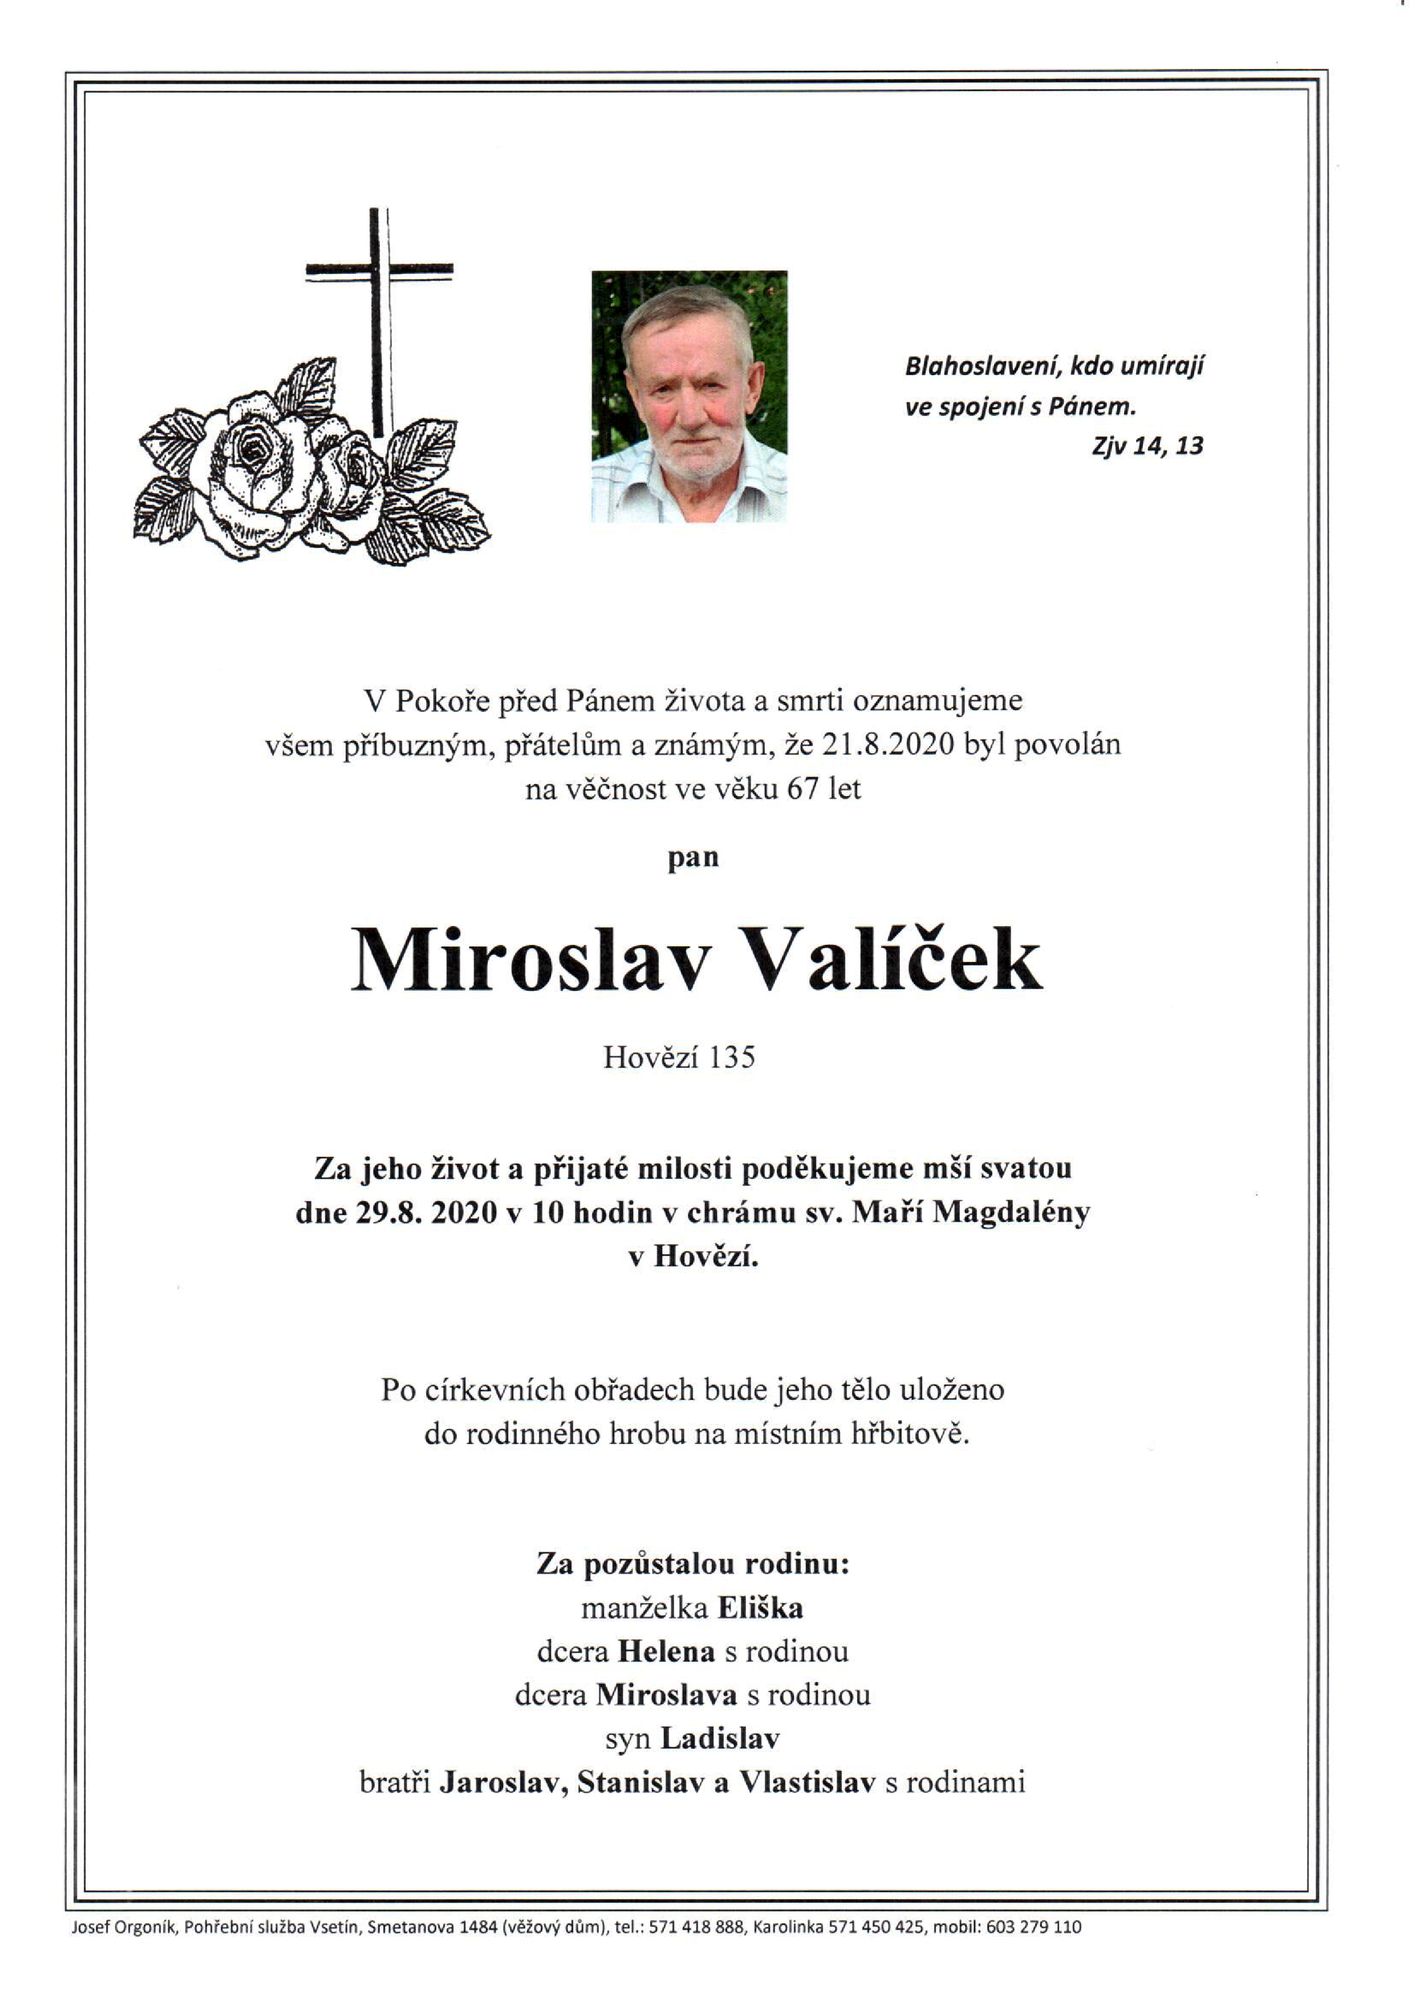 Miroslav Valíček